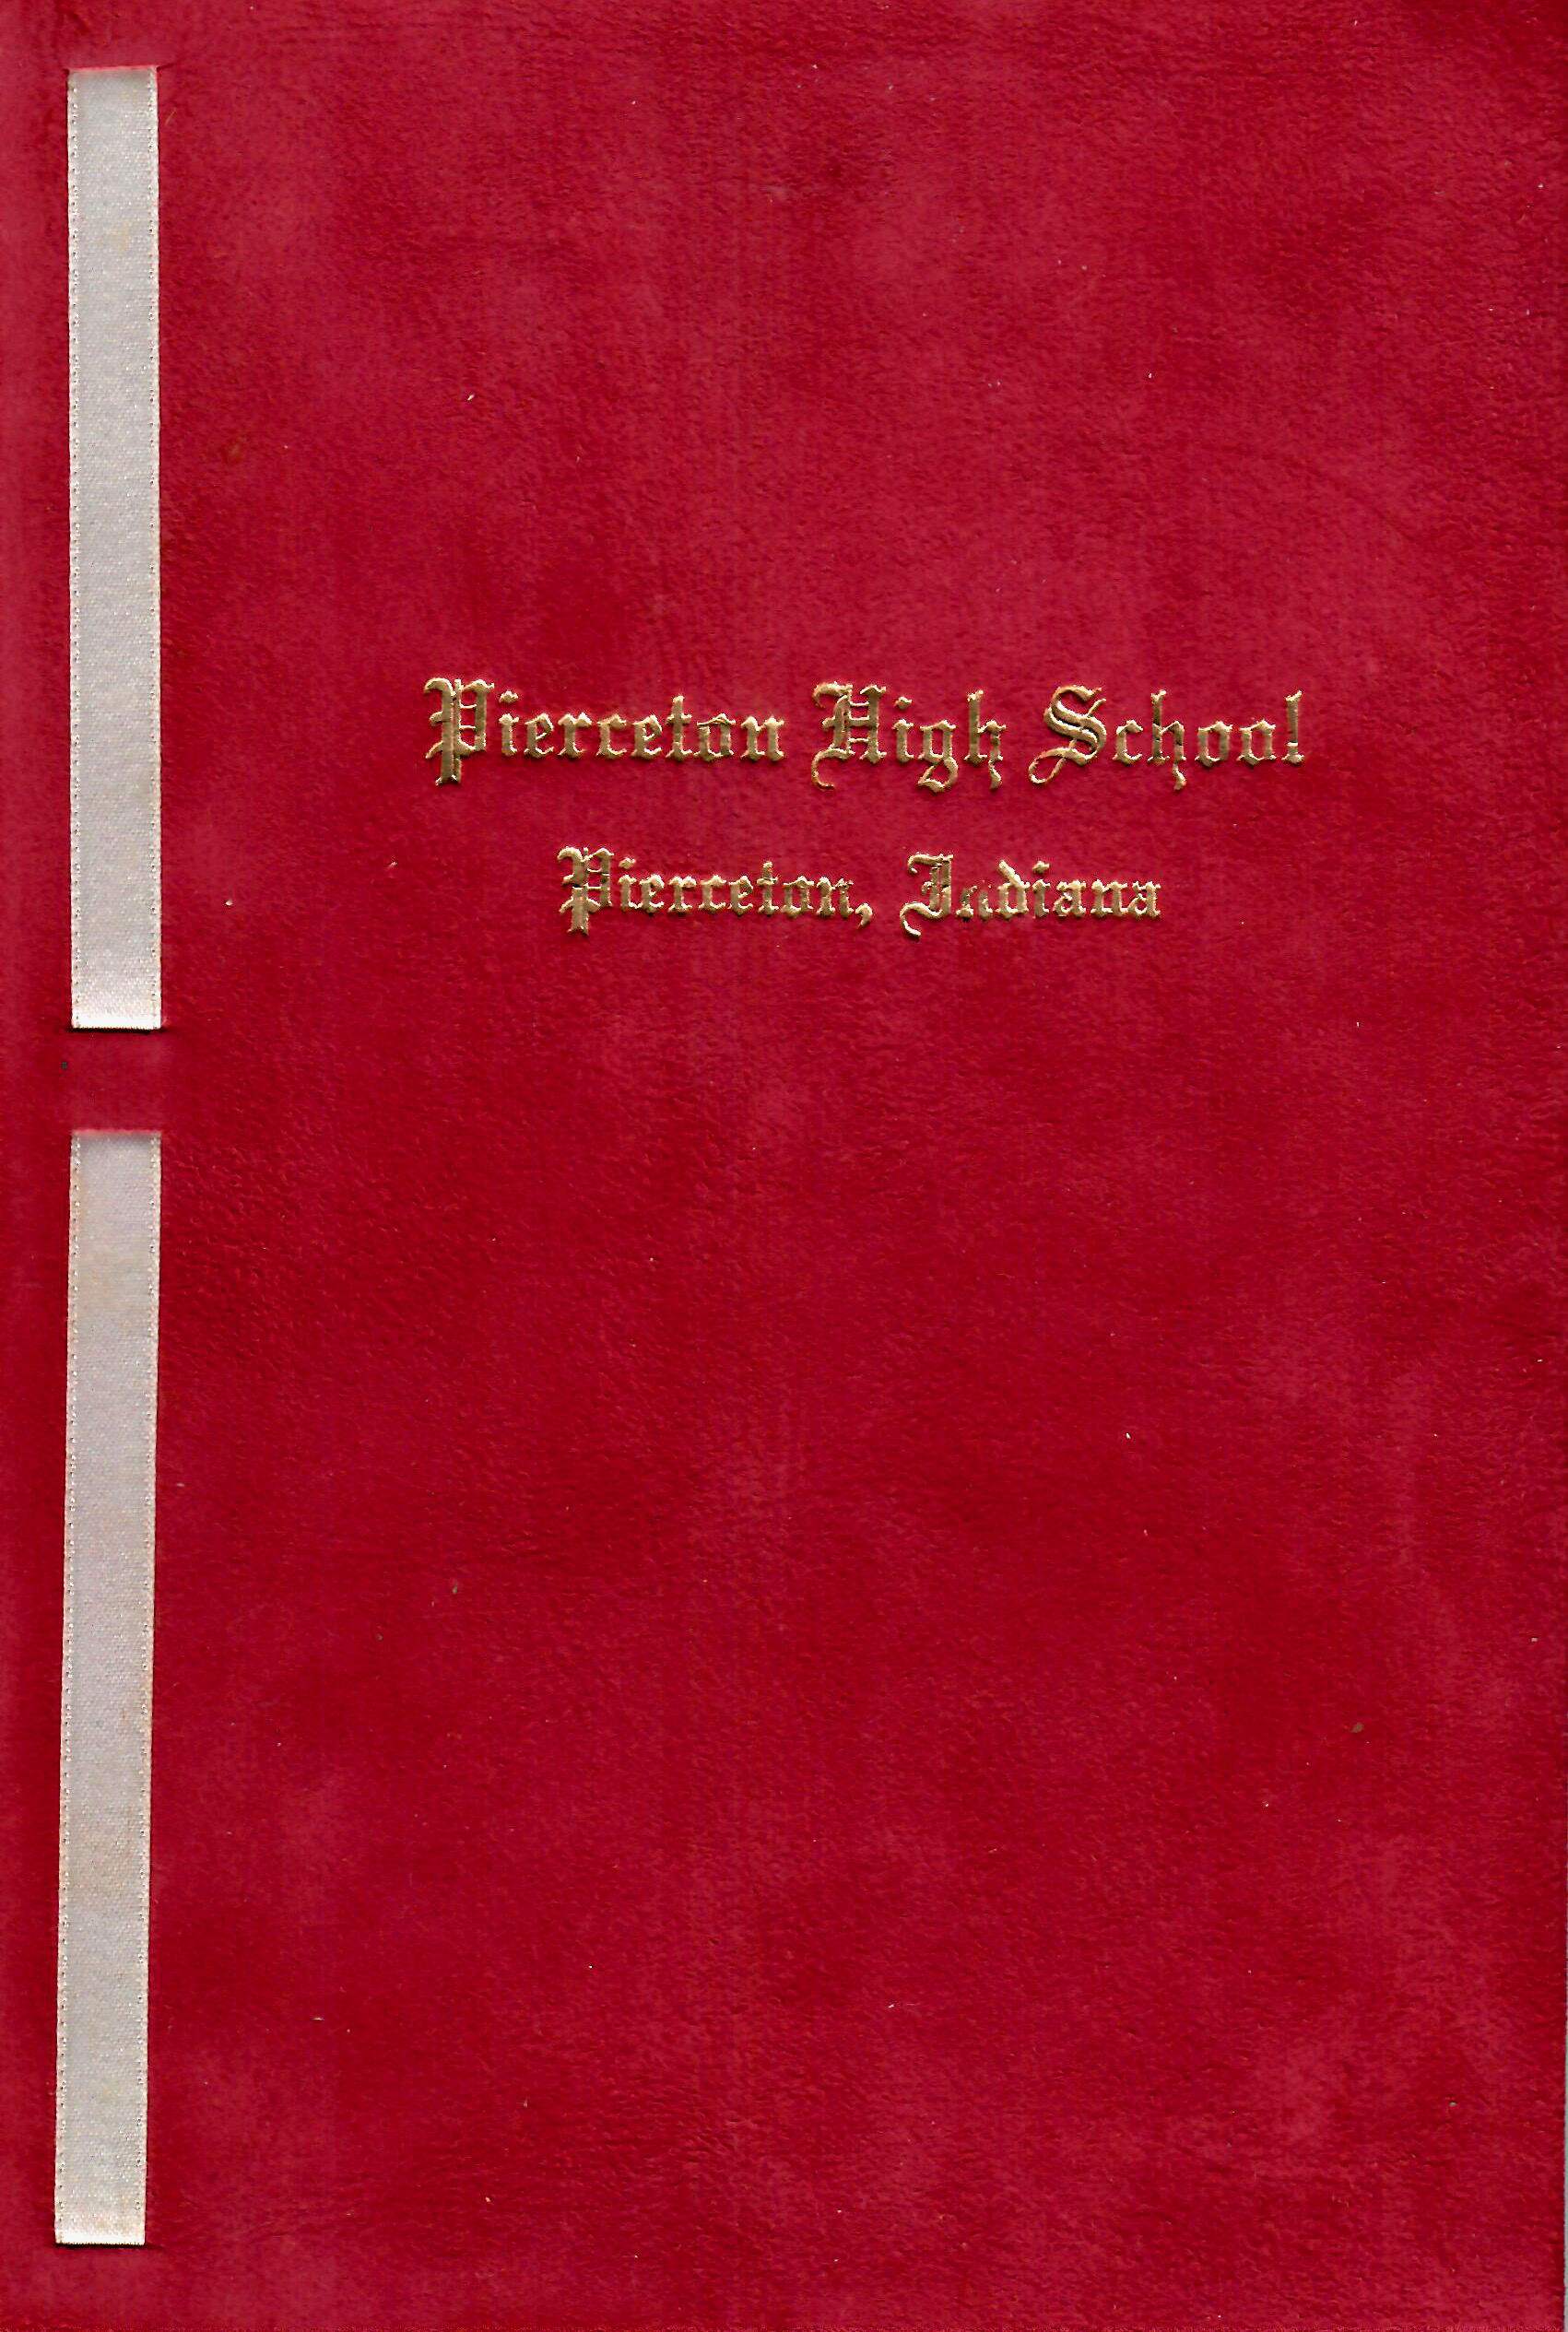 1952 PHS diploma cover